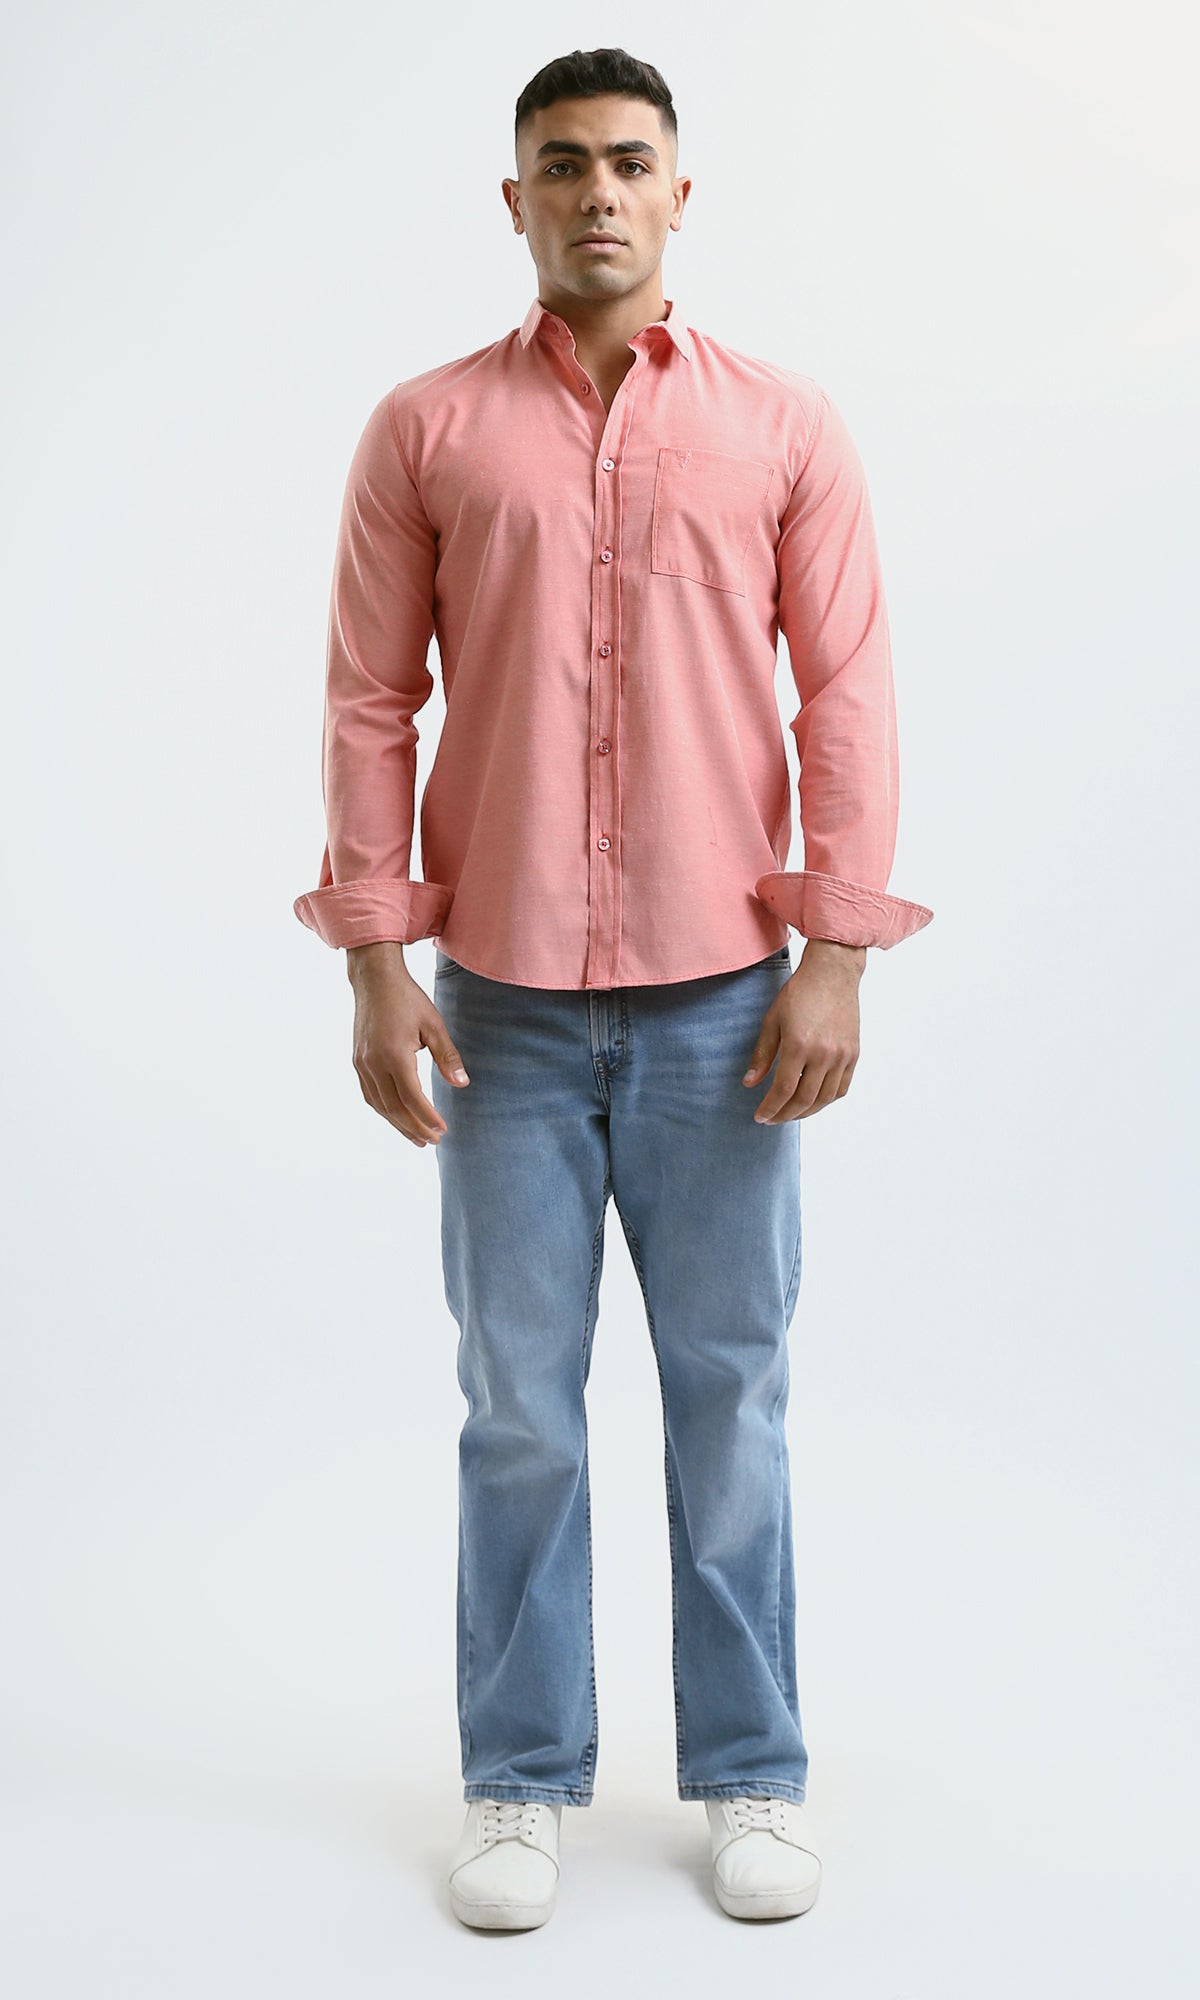 O181000 Solid Coral Orange Shirt With Front Pocket